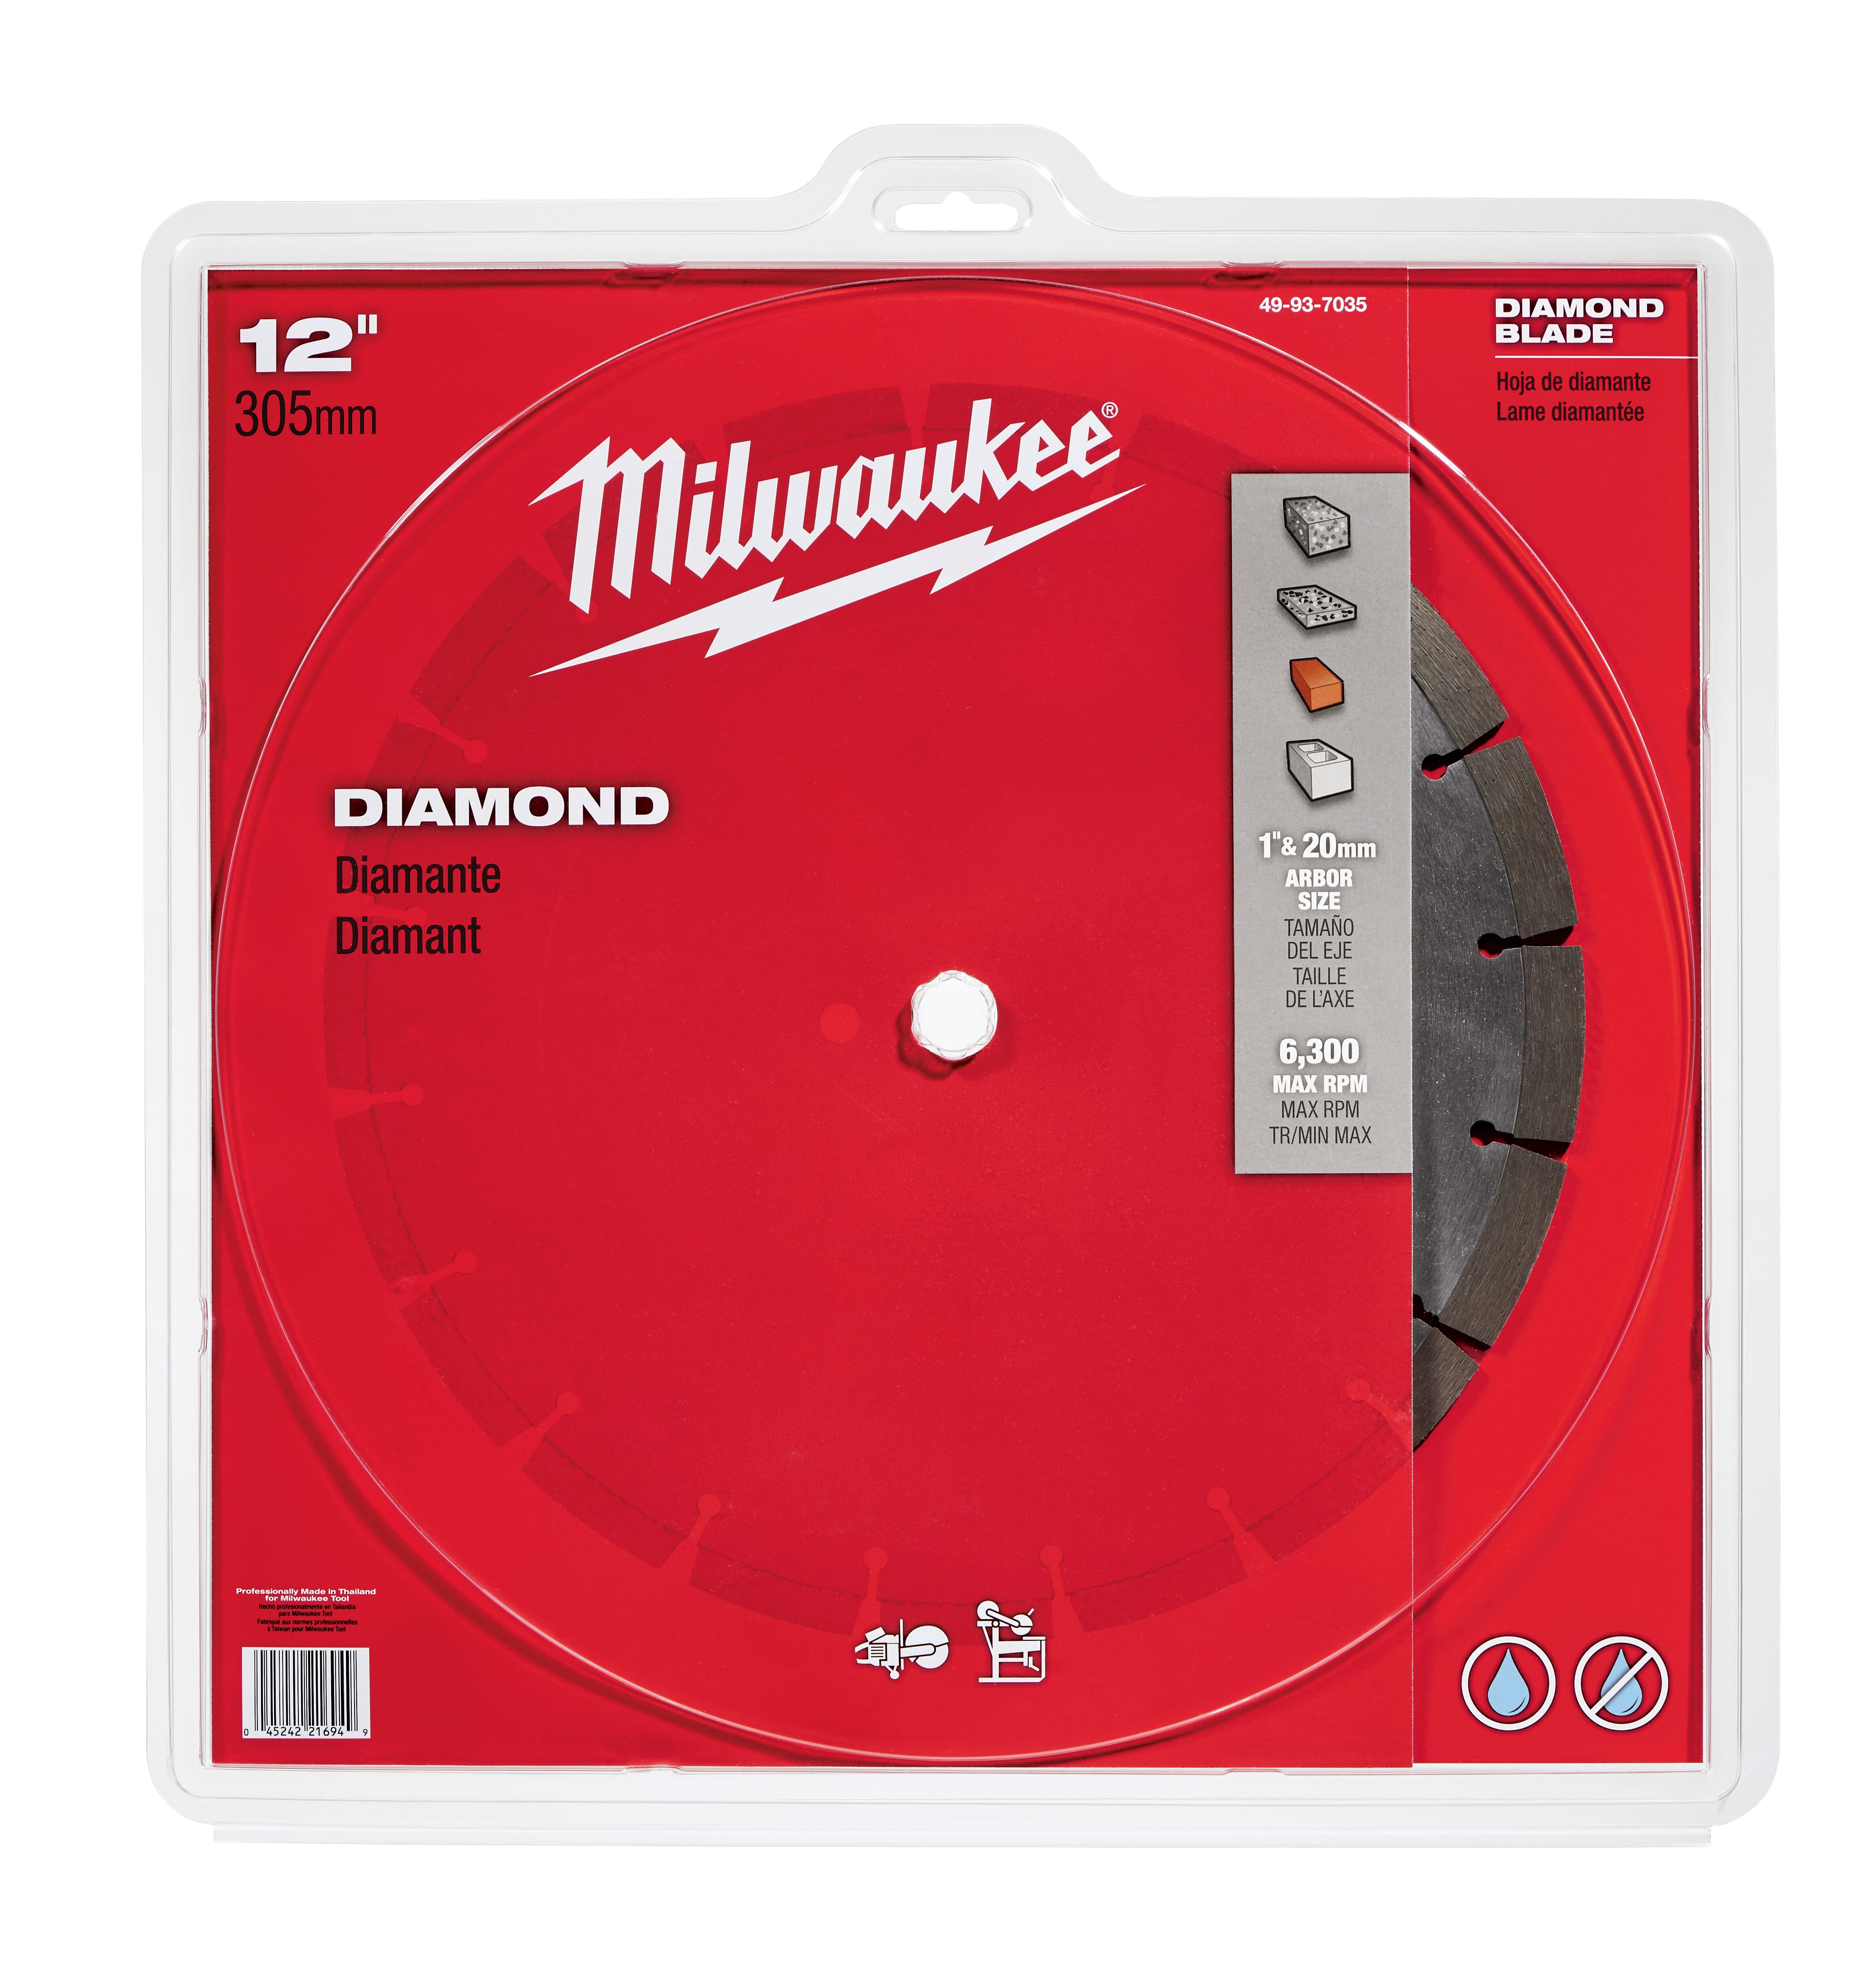 Milwaukee® 49-93-7035 Premium Segmented Circular Diamond Saw Blade, 12 in Dia Blade, 1 in, 20 mm Arbor/Shank, Wet/Dry Cutting